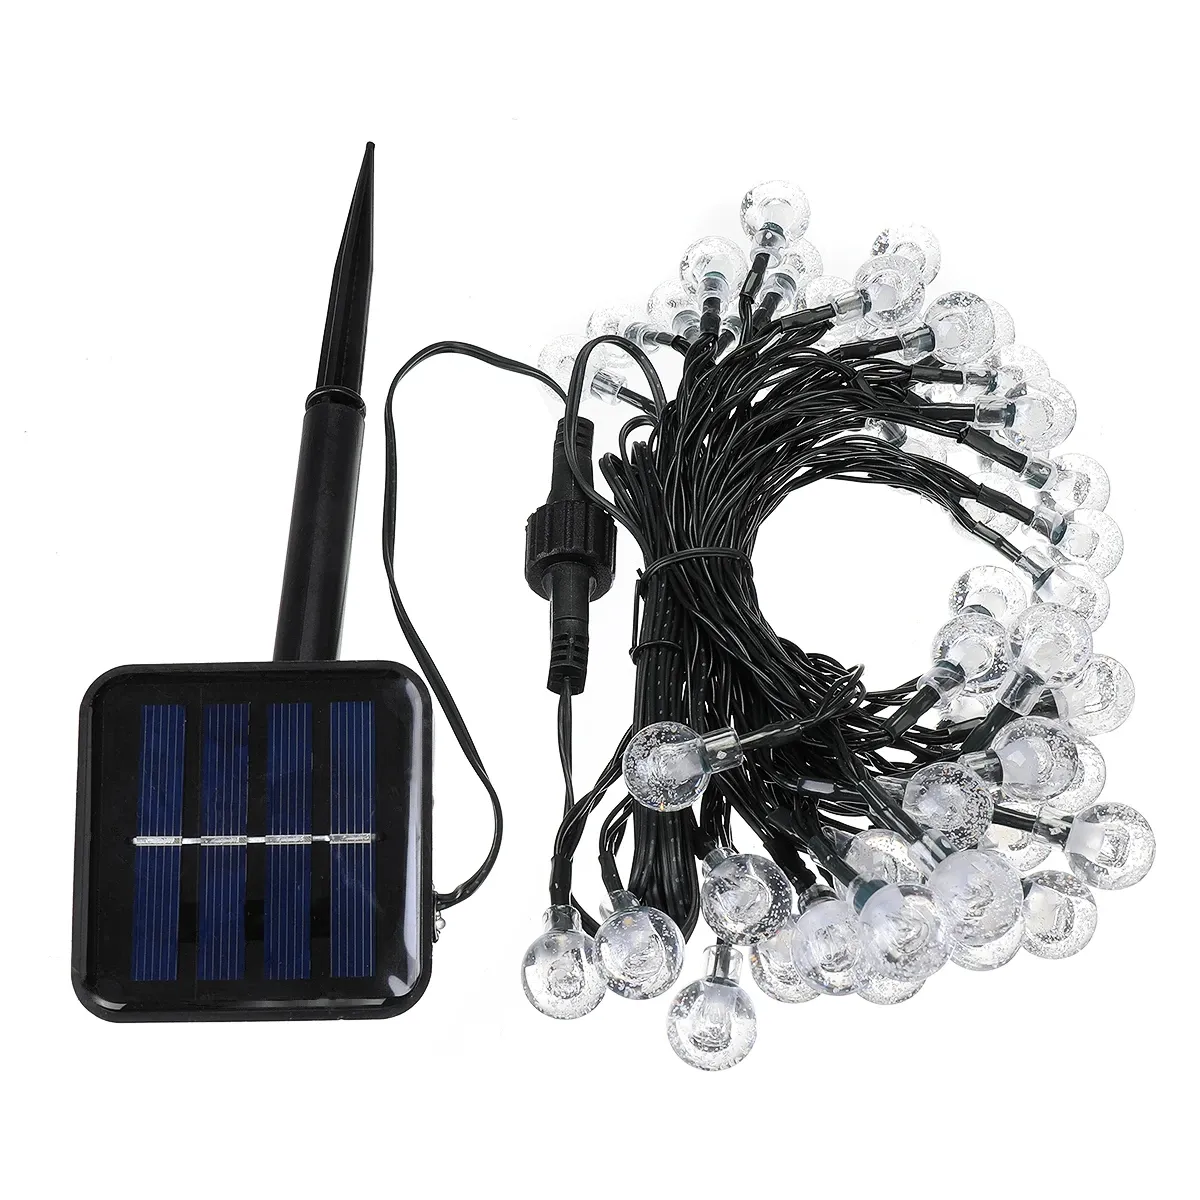 9.5m USB+Solar Powered 50 LED String Light Outdoor Garden Path Yard Waterproof Decor Lamp - White